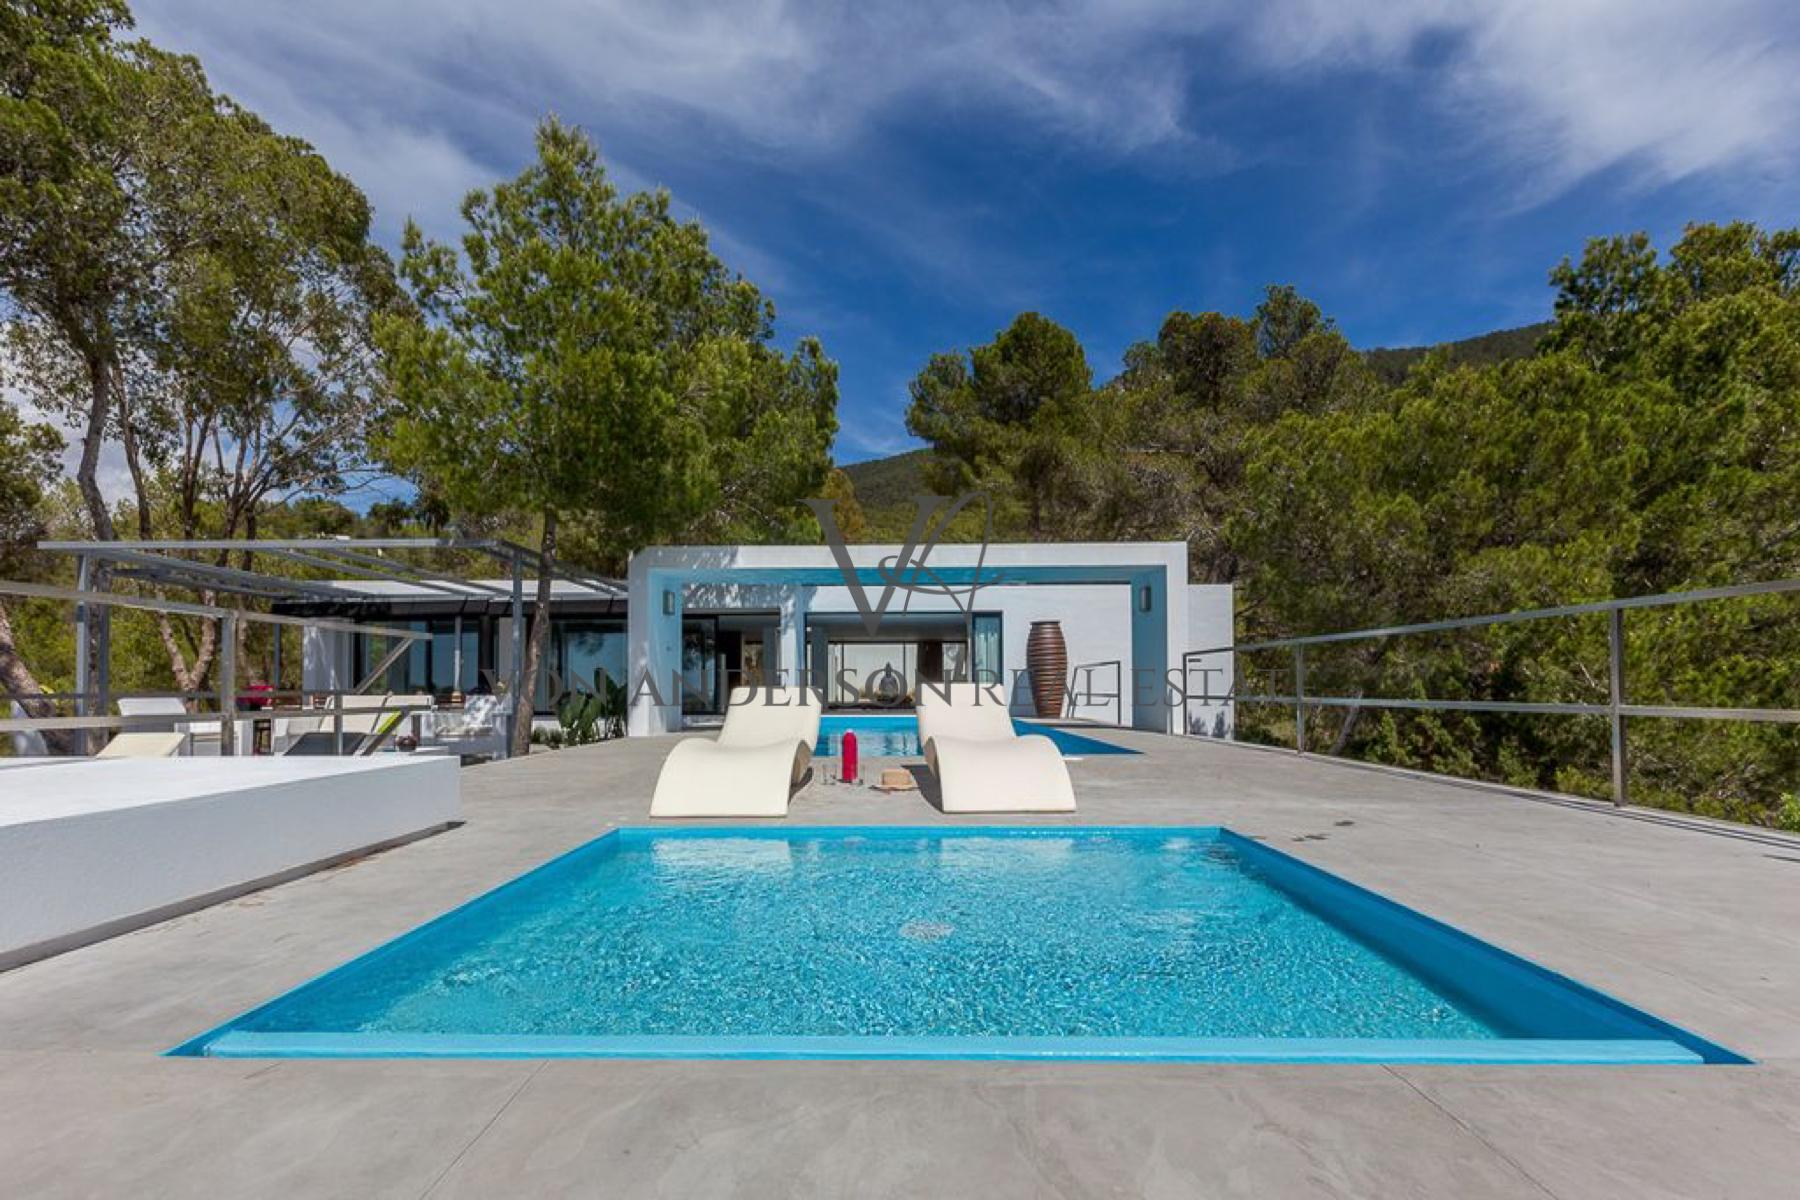 Breathtaking Modern Villa Offering Serene Sea and Sunset Views, ref. VA1040, for sale in Ibiza by Von Anderson Real Estate